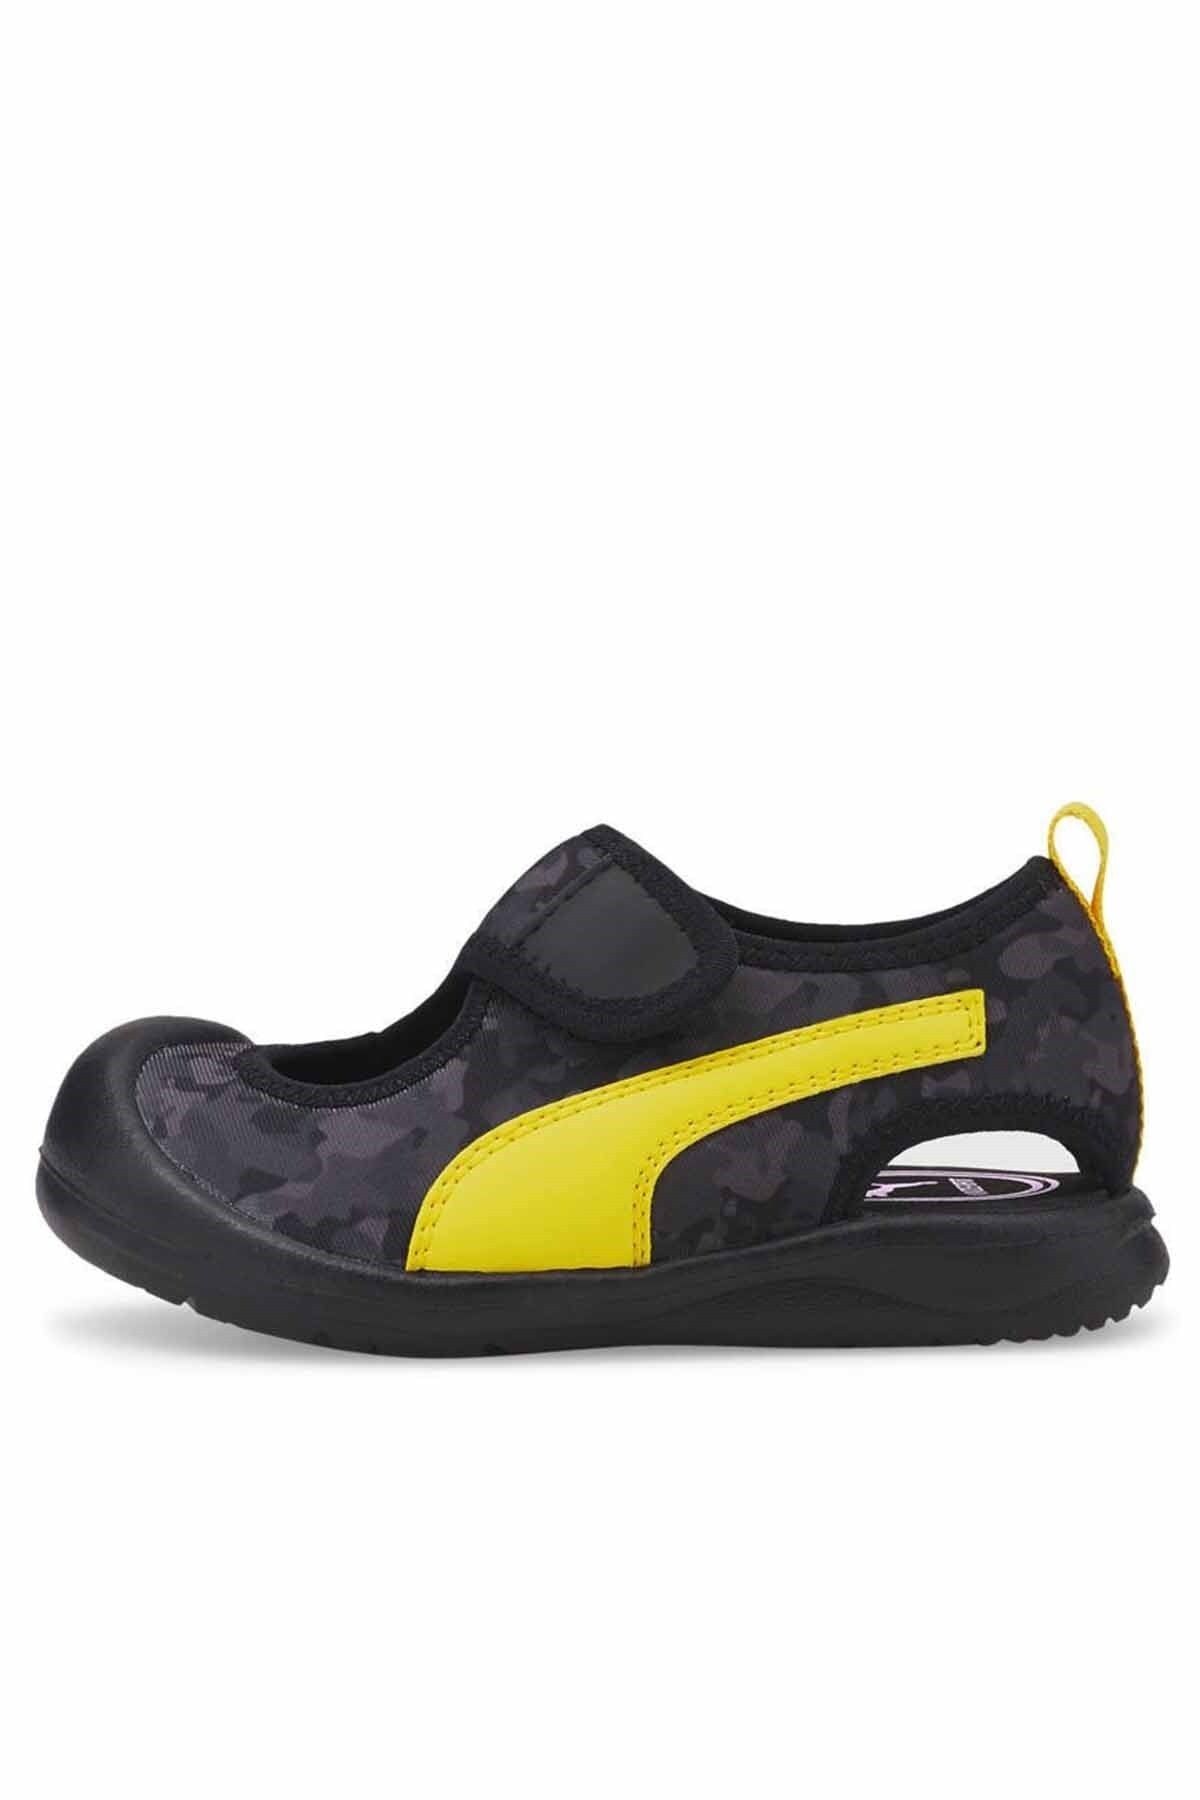 Puma Aquacat Inf Çocuk Sandalet Ayakkabı 372158 11 Sıyah-sarı